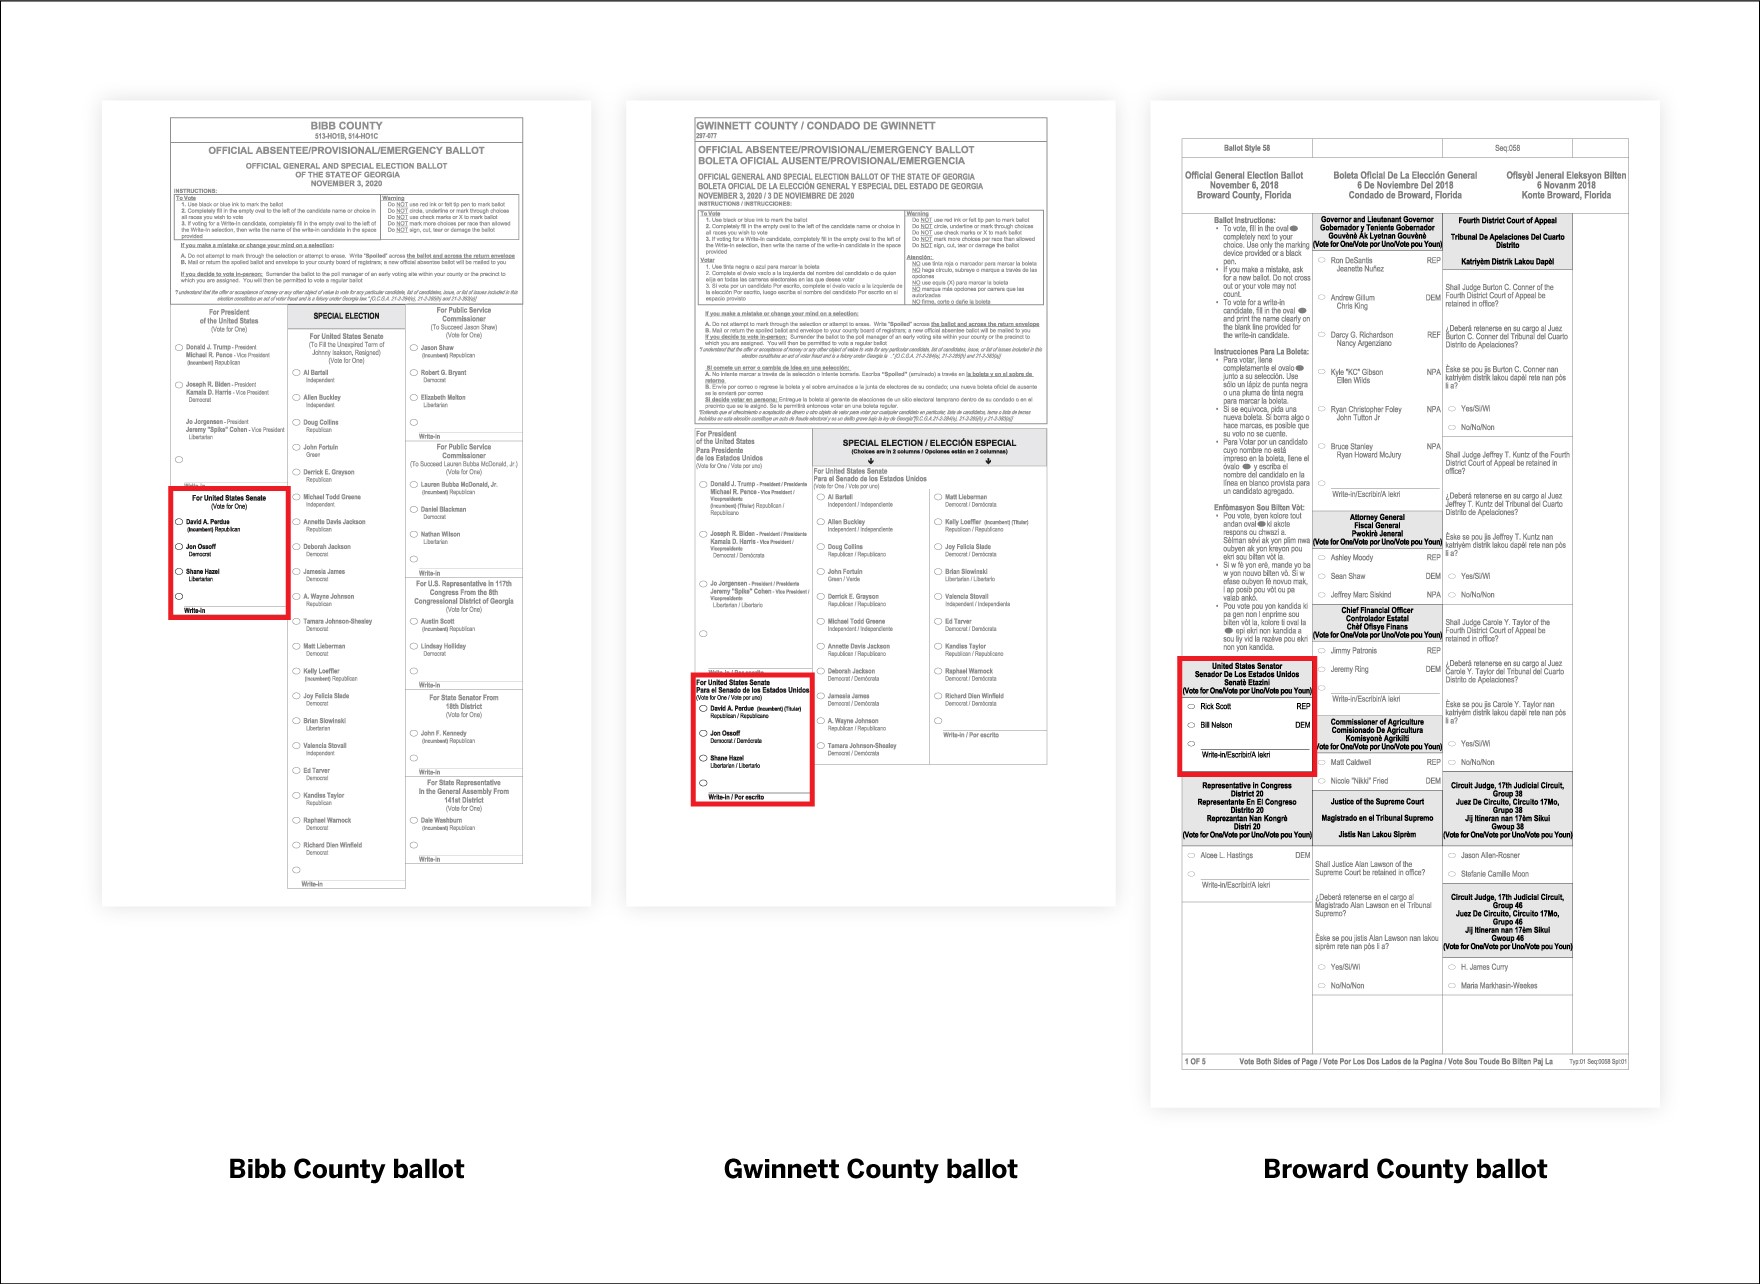 Bibb, Gwinnett, and Broward County Ballots